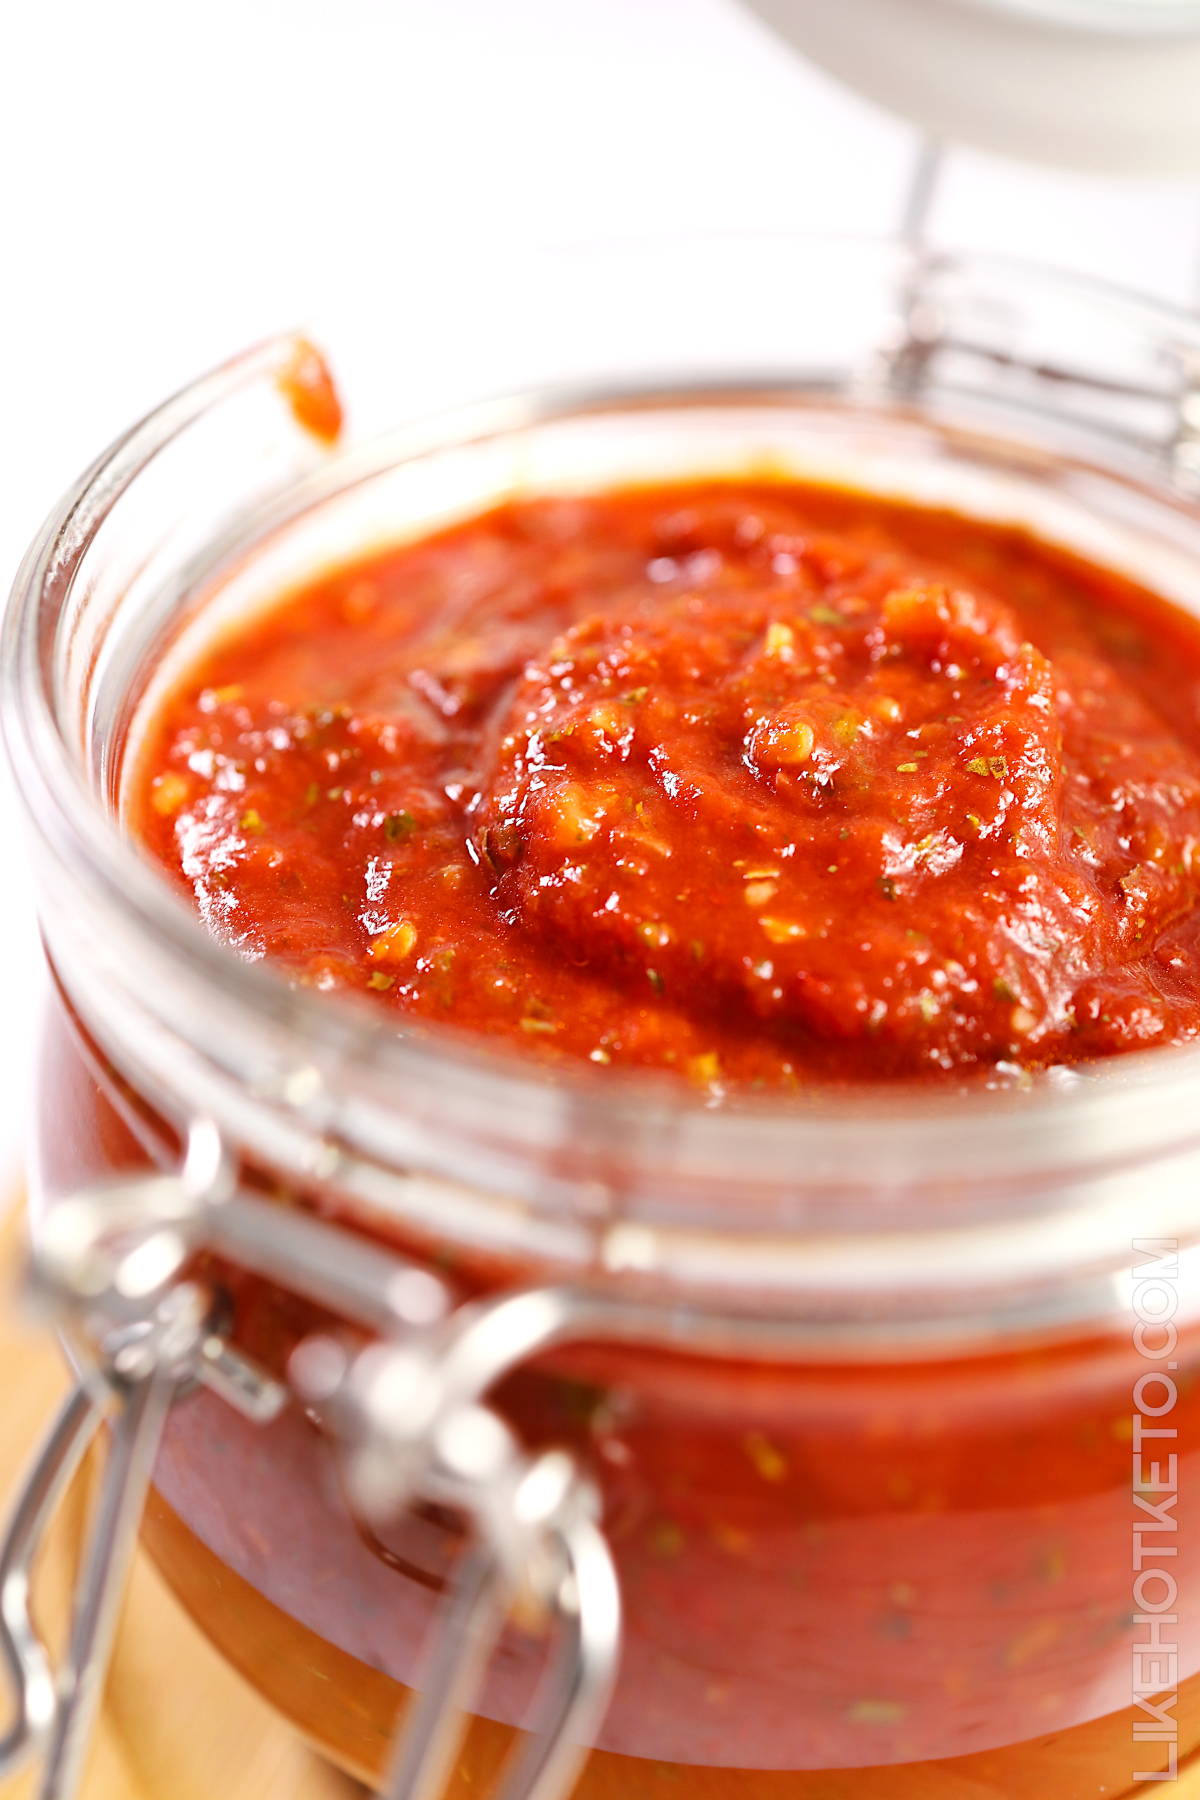 Mason jar with homemade tomato sauce.